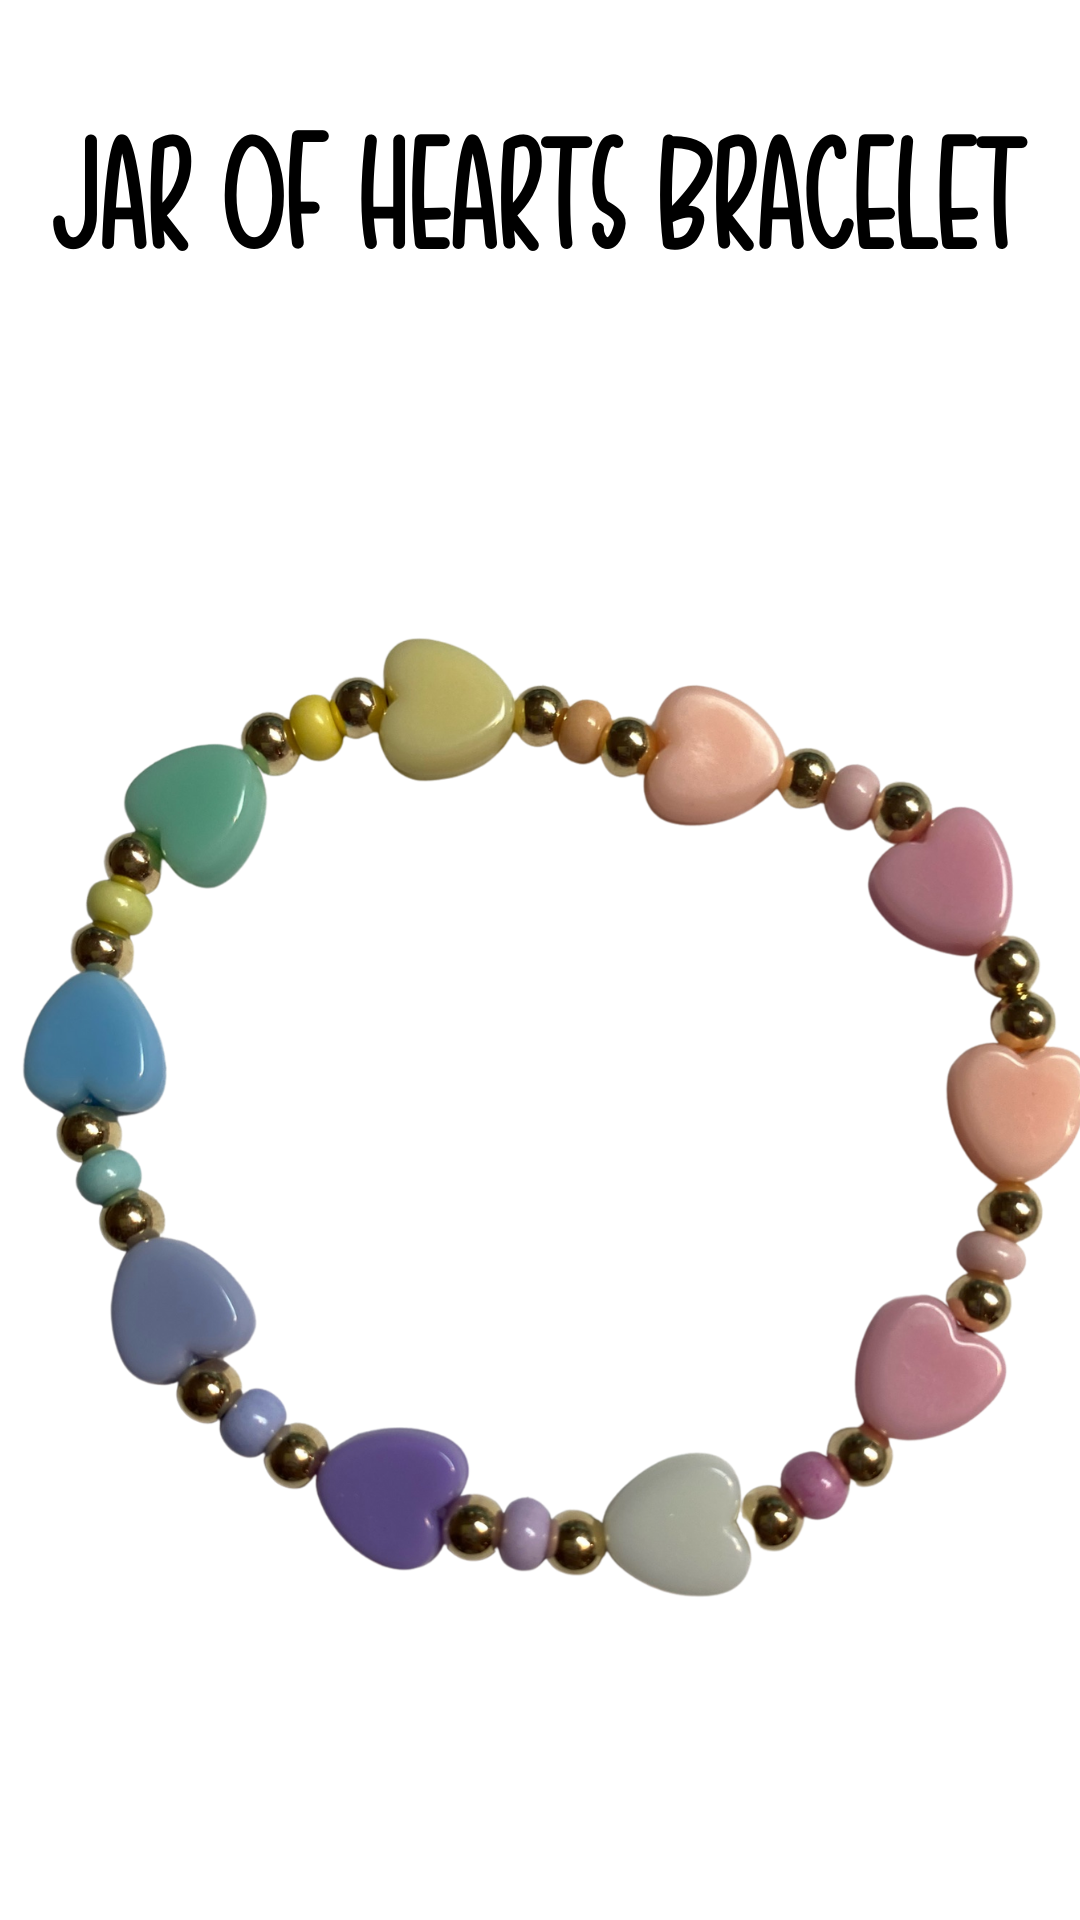 Jar of hearts bracelet